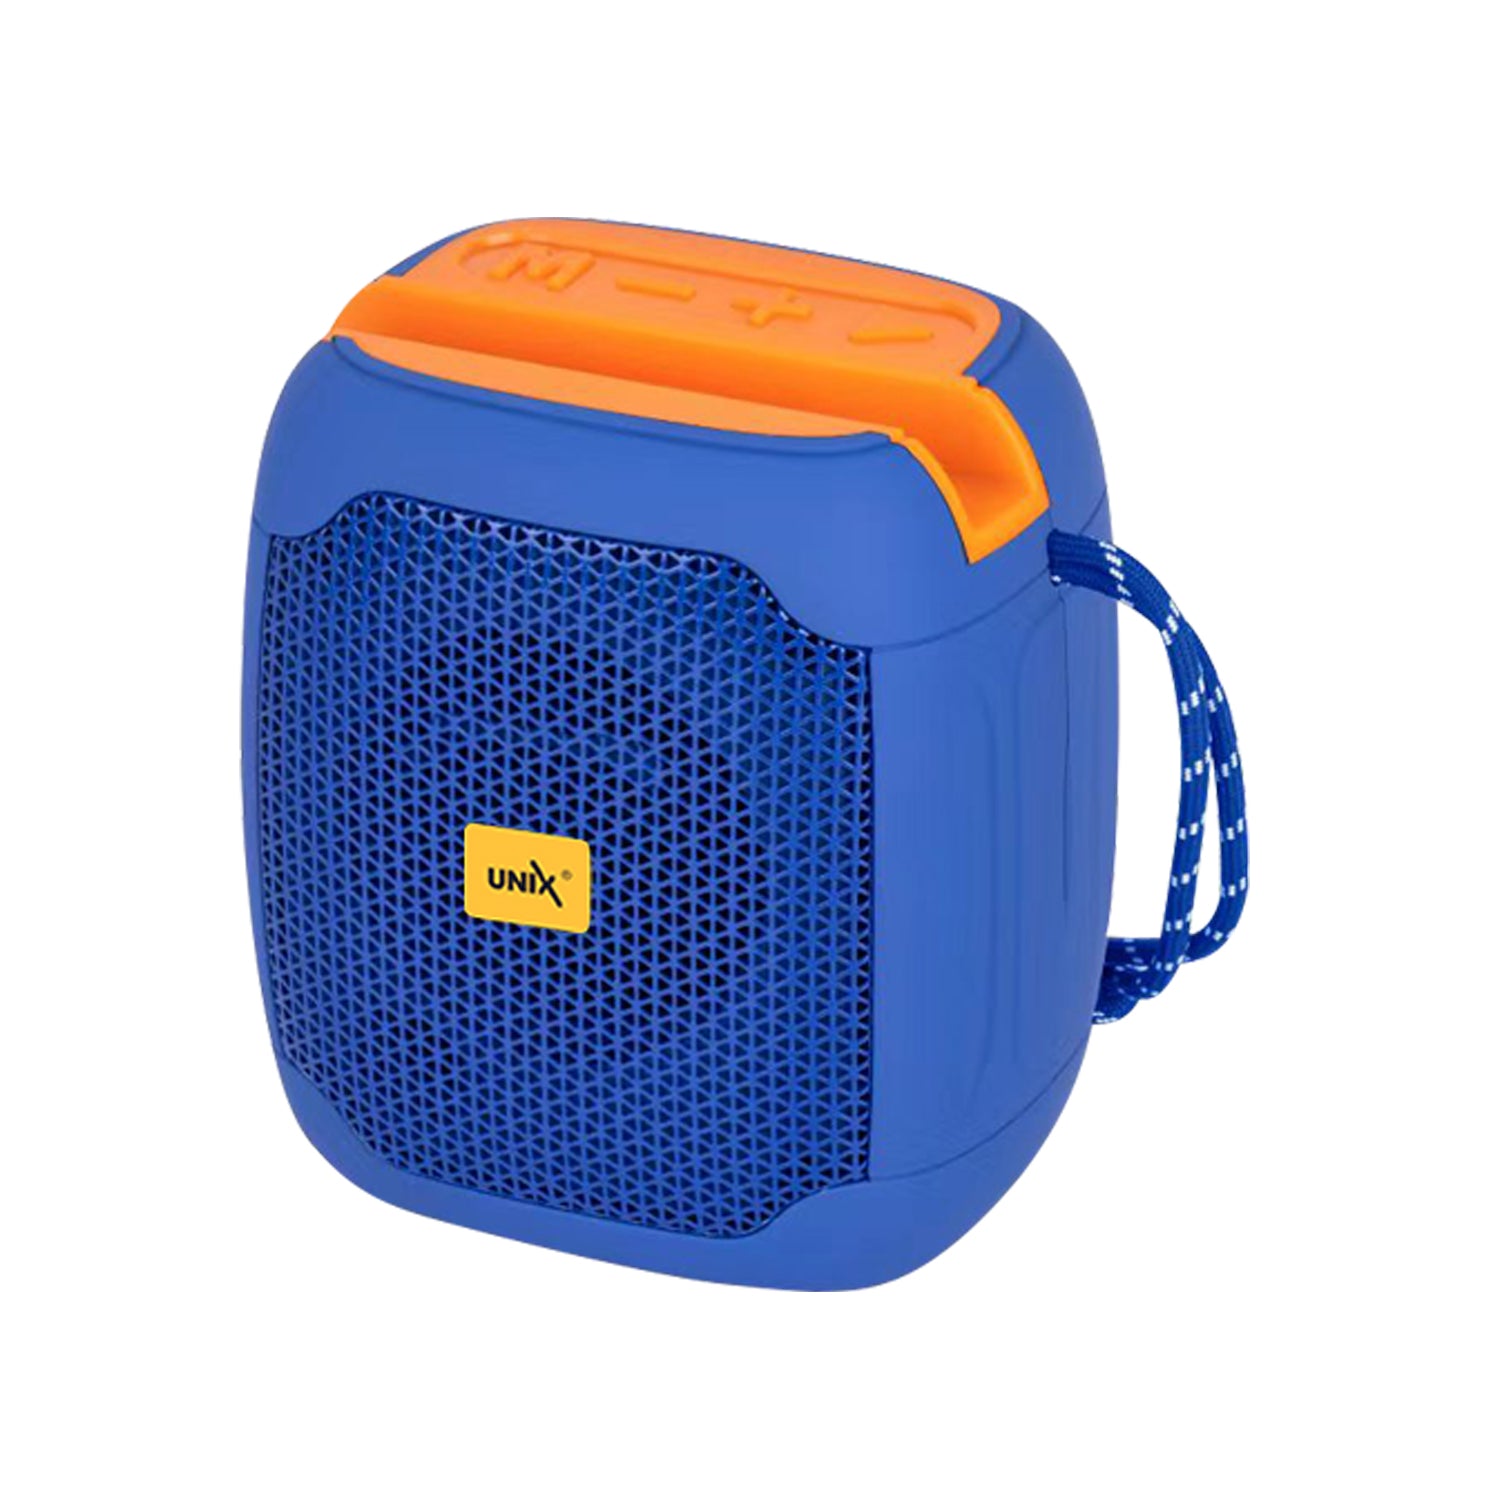 Unix UX-888 Super Sonic Wireless Speaker - Super Bass Blue